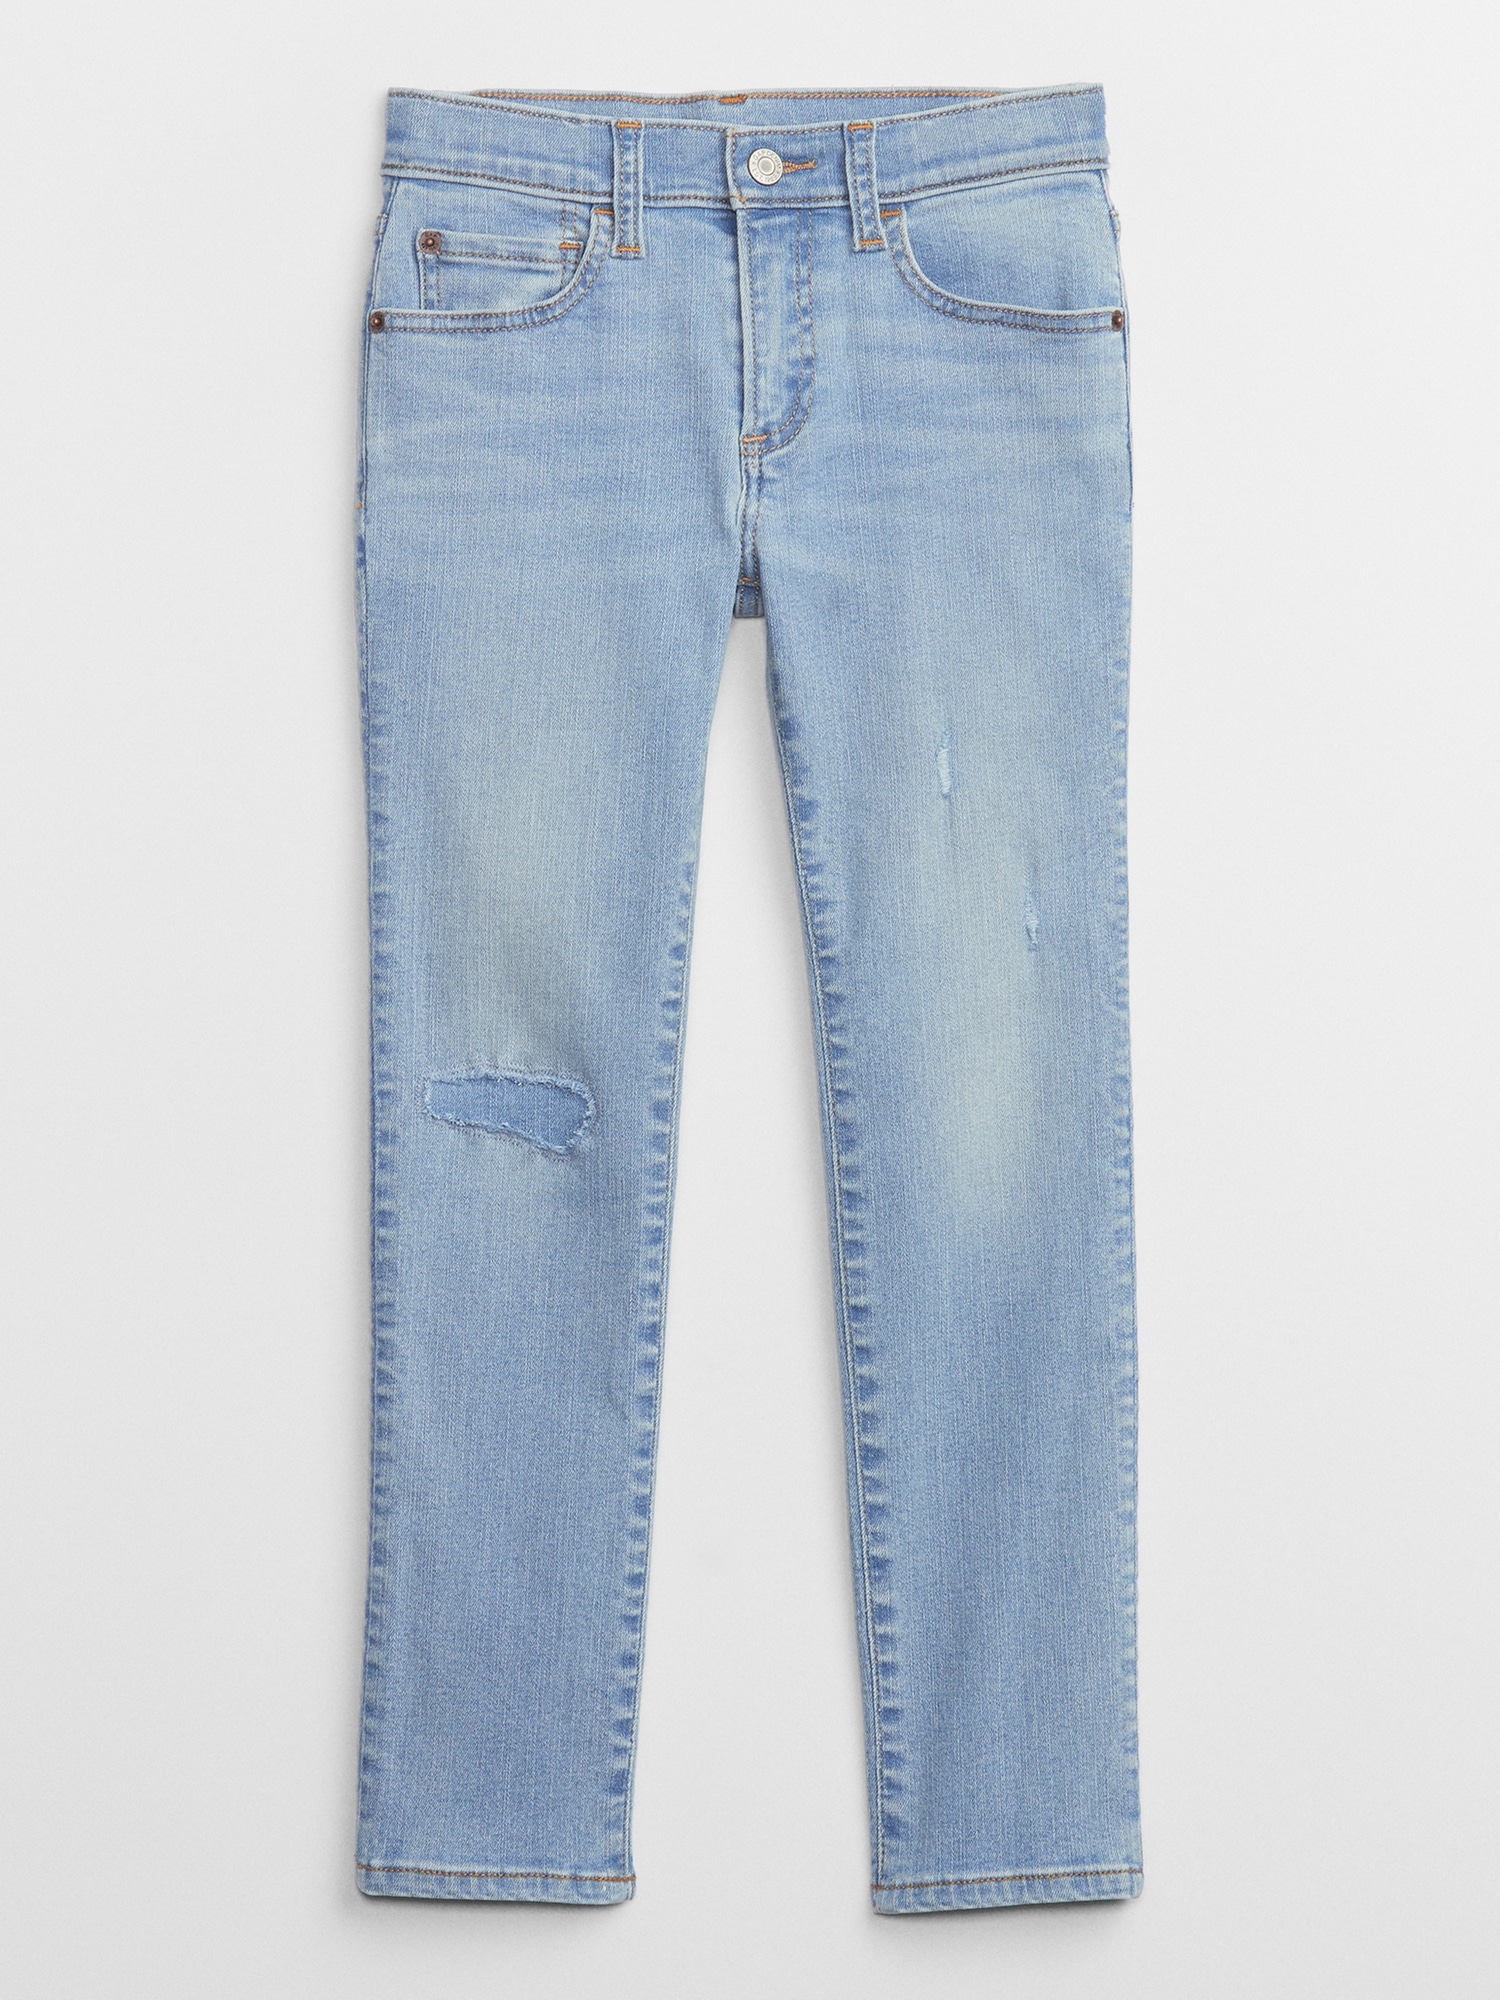 Kids Destructed Skinny Jeans | Gap Factory